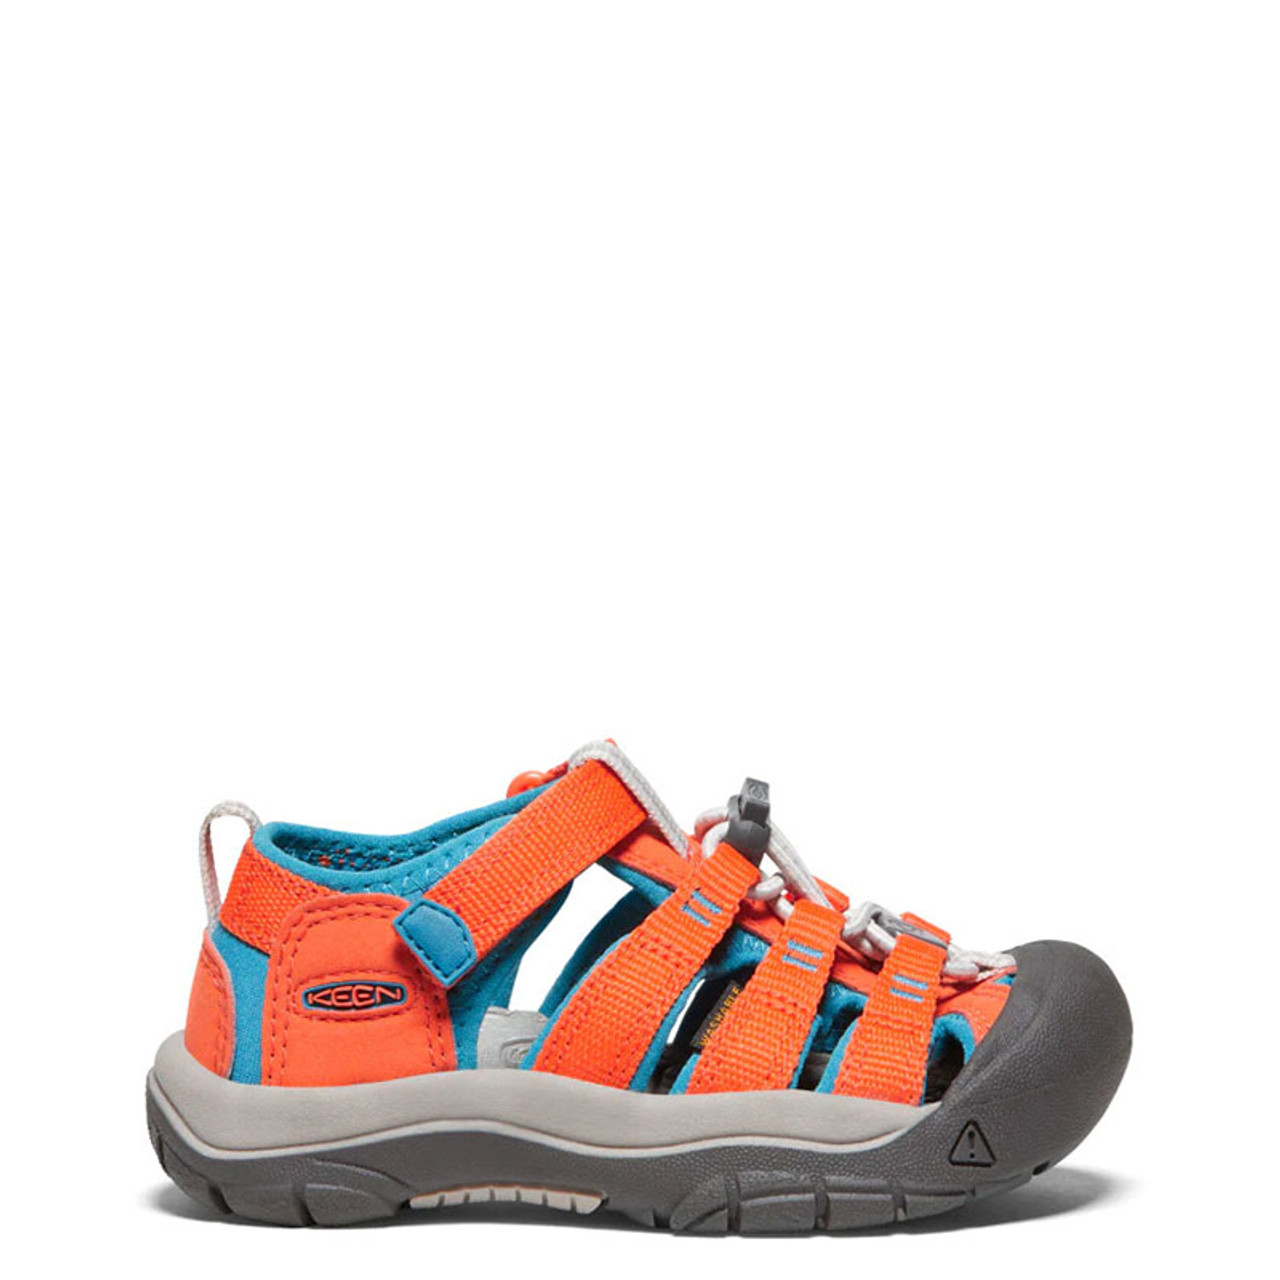 Keen LITTLE KIDS' NEWPORT H2 Sandals Safety Orange - Family Footwear Center